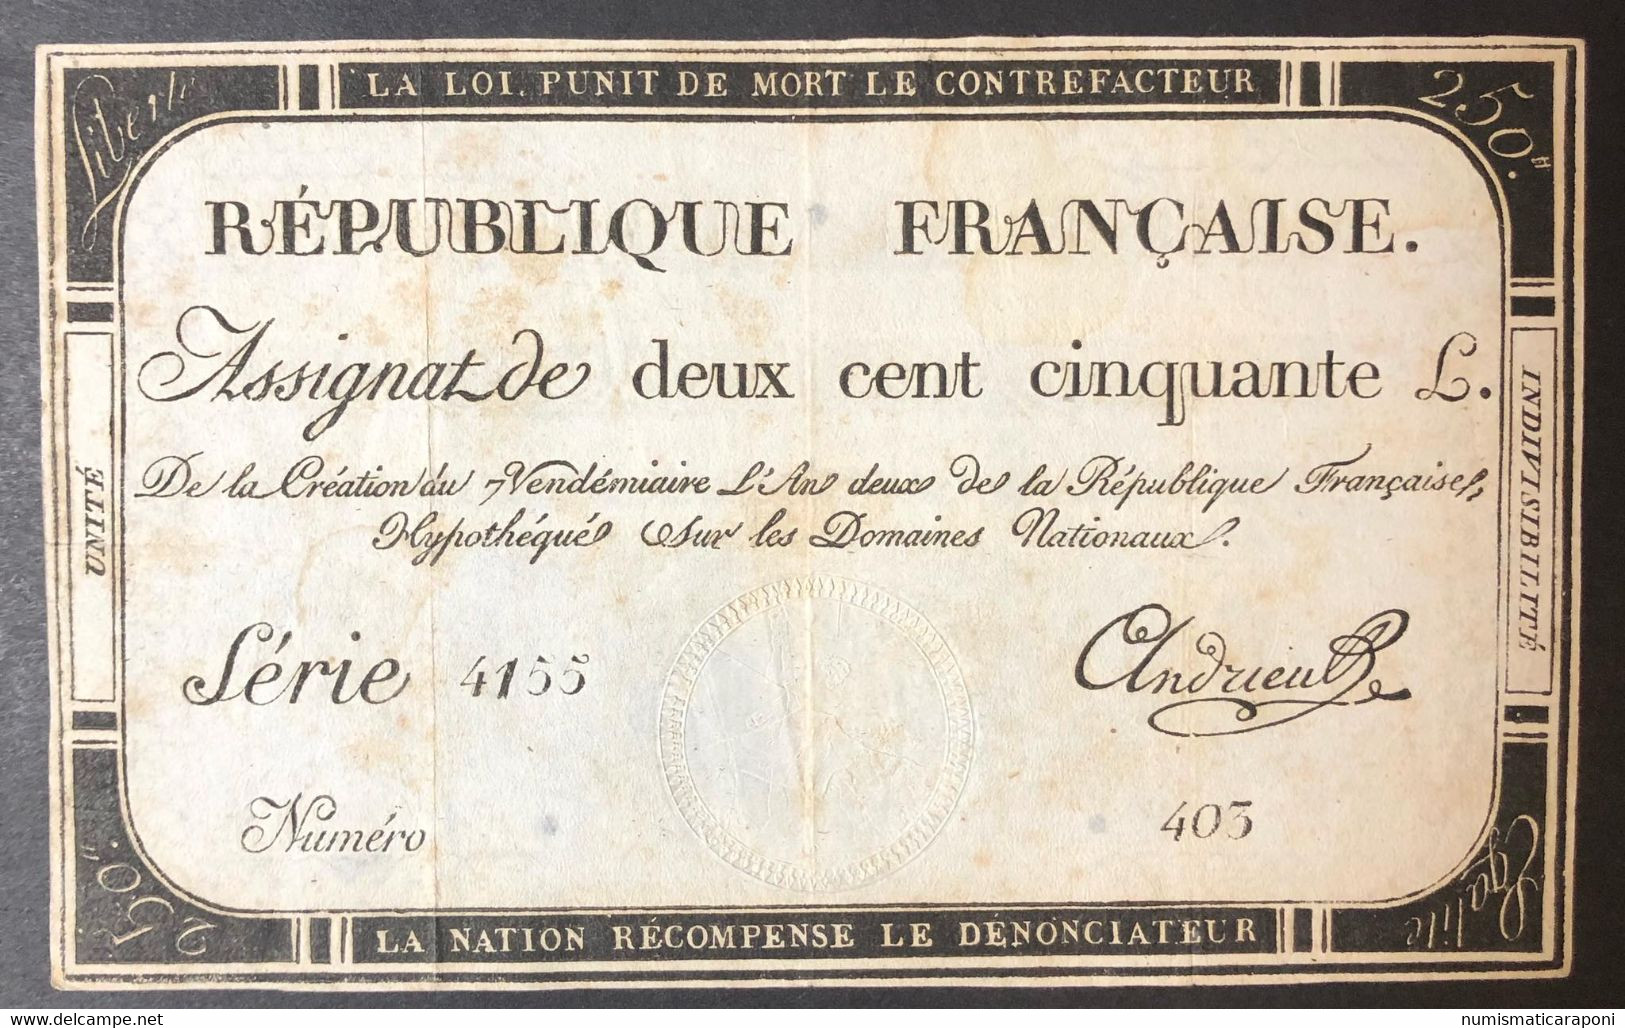 Francia France Assignat De 250 LIVRES 28 SETTEMBRE 1793 7 VENDÉMIAIRE Lotto.3843 - ...-1889 Anciens Francs Circulés Au XIXème